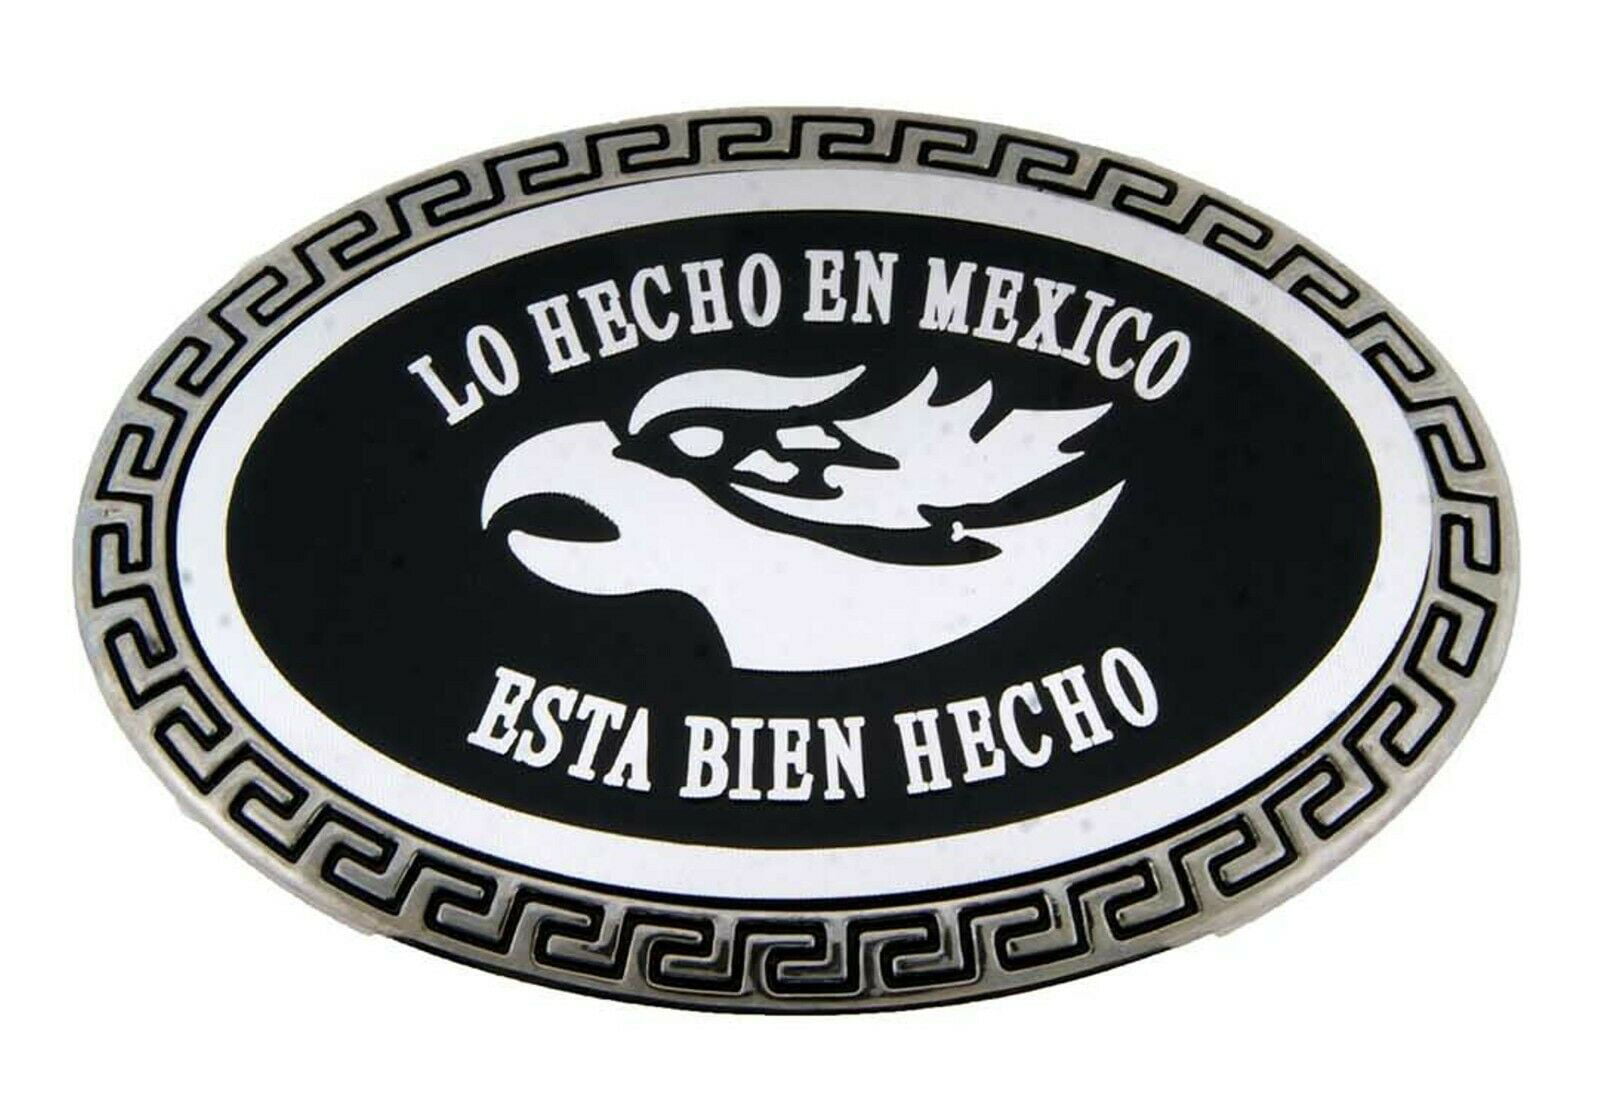 State Mexico Hecho en Lindo Michochan (Wron Spelling) Belt Buckle Western  Aztec Cowboy rodeo 